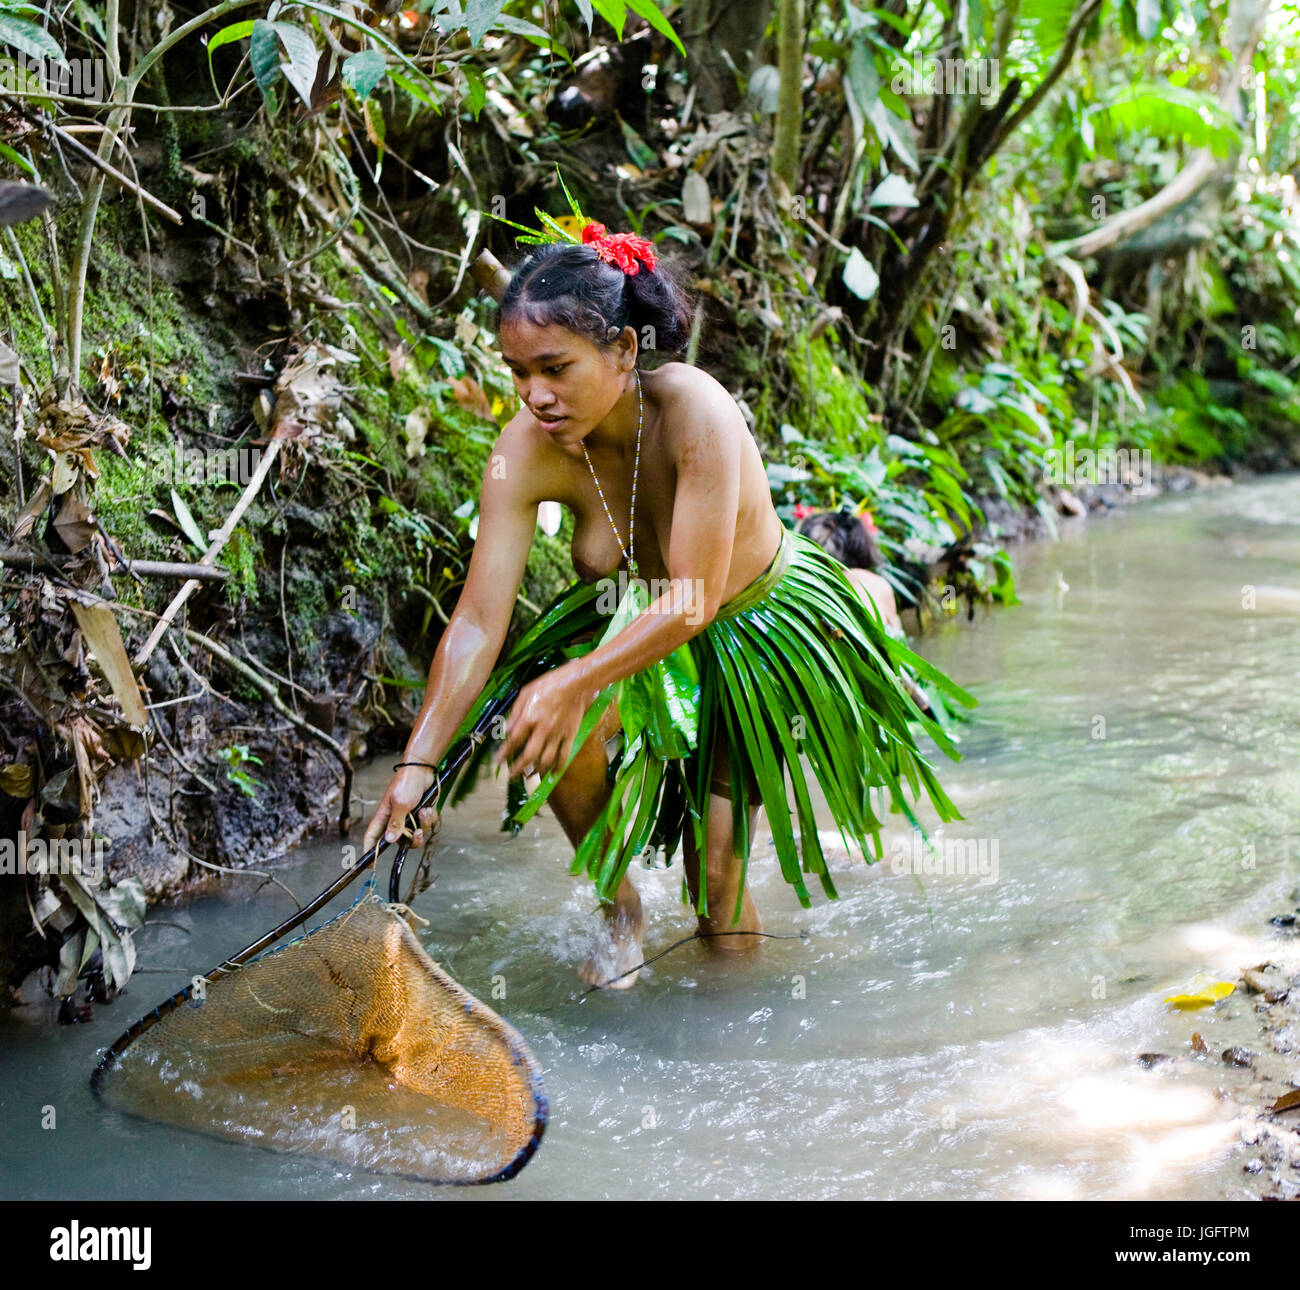 MENTAWAI PEOPLE, WEST SUMATRA, SIBERUT ISLAND, INDONESIA – 16 NOVEMBER 2010: Women Mentawai tribe fishing. Stock Photo